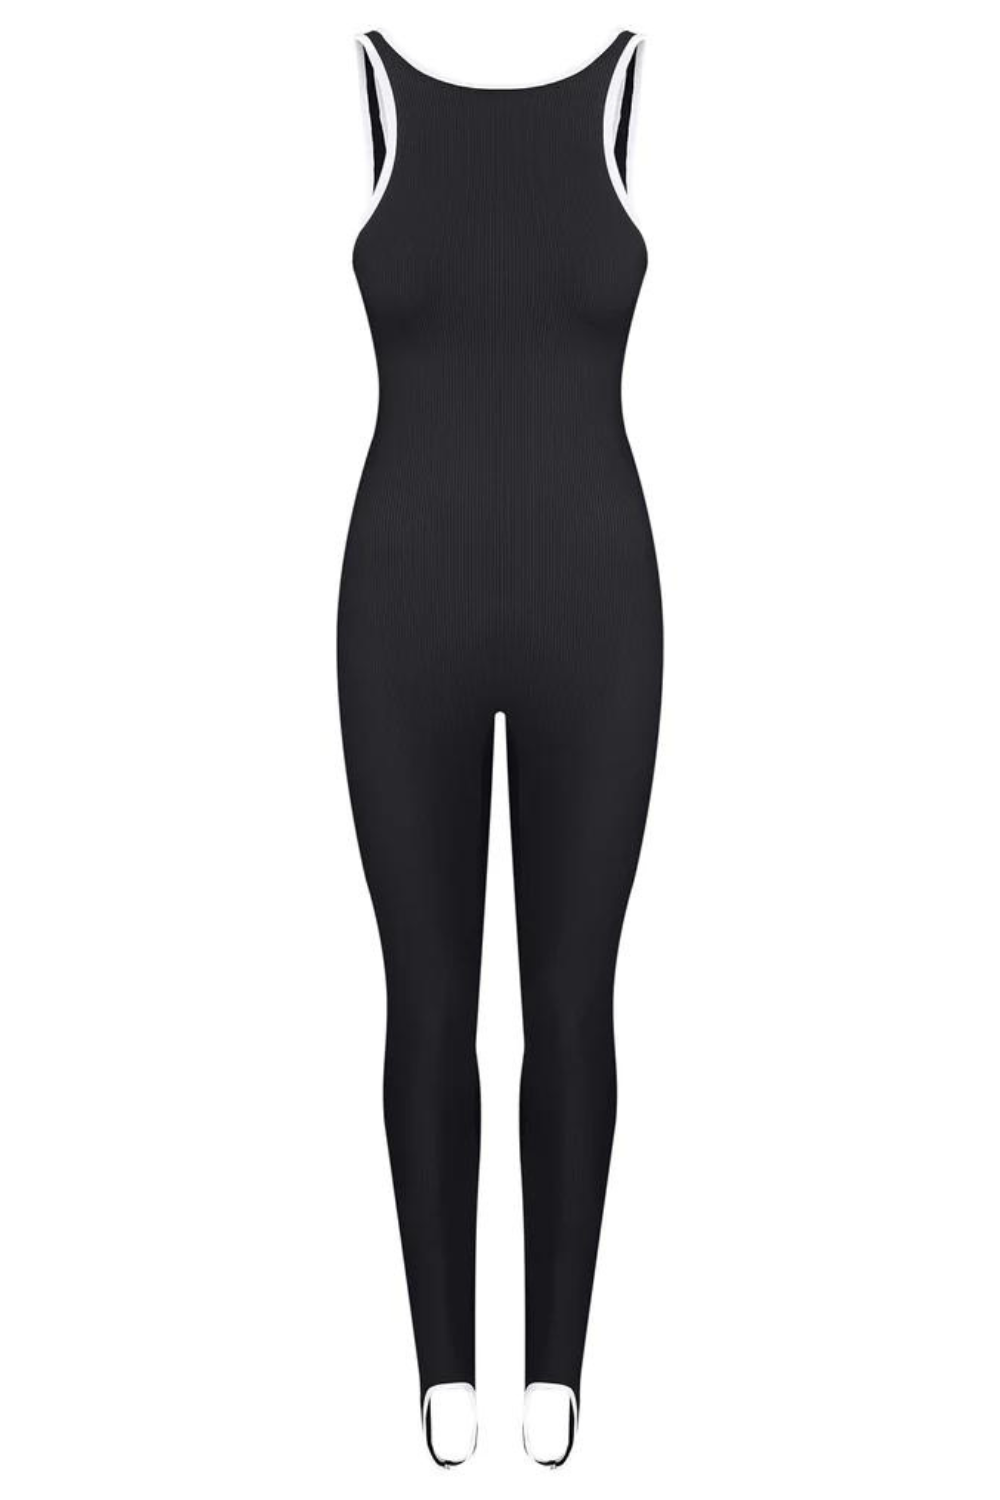 Jumpsuit - Sydney Black, (Clazzy), Clazz0001